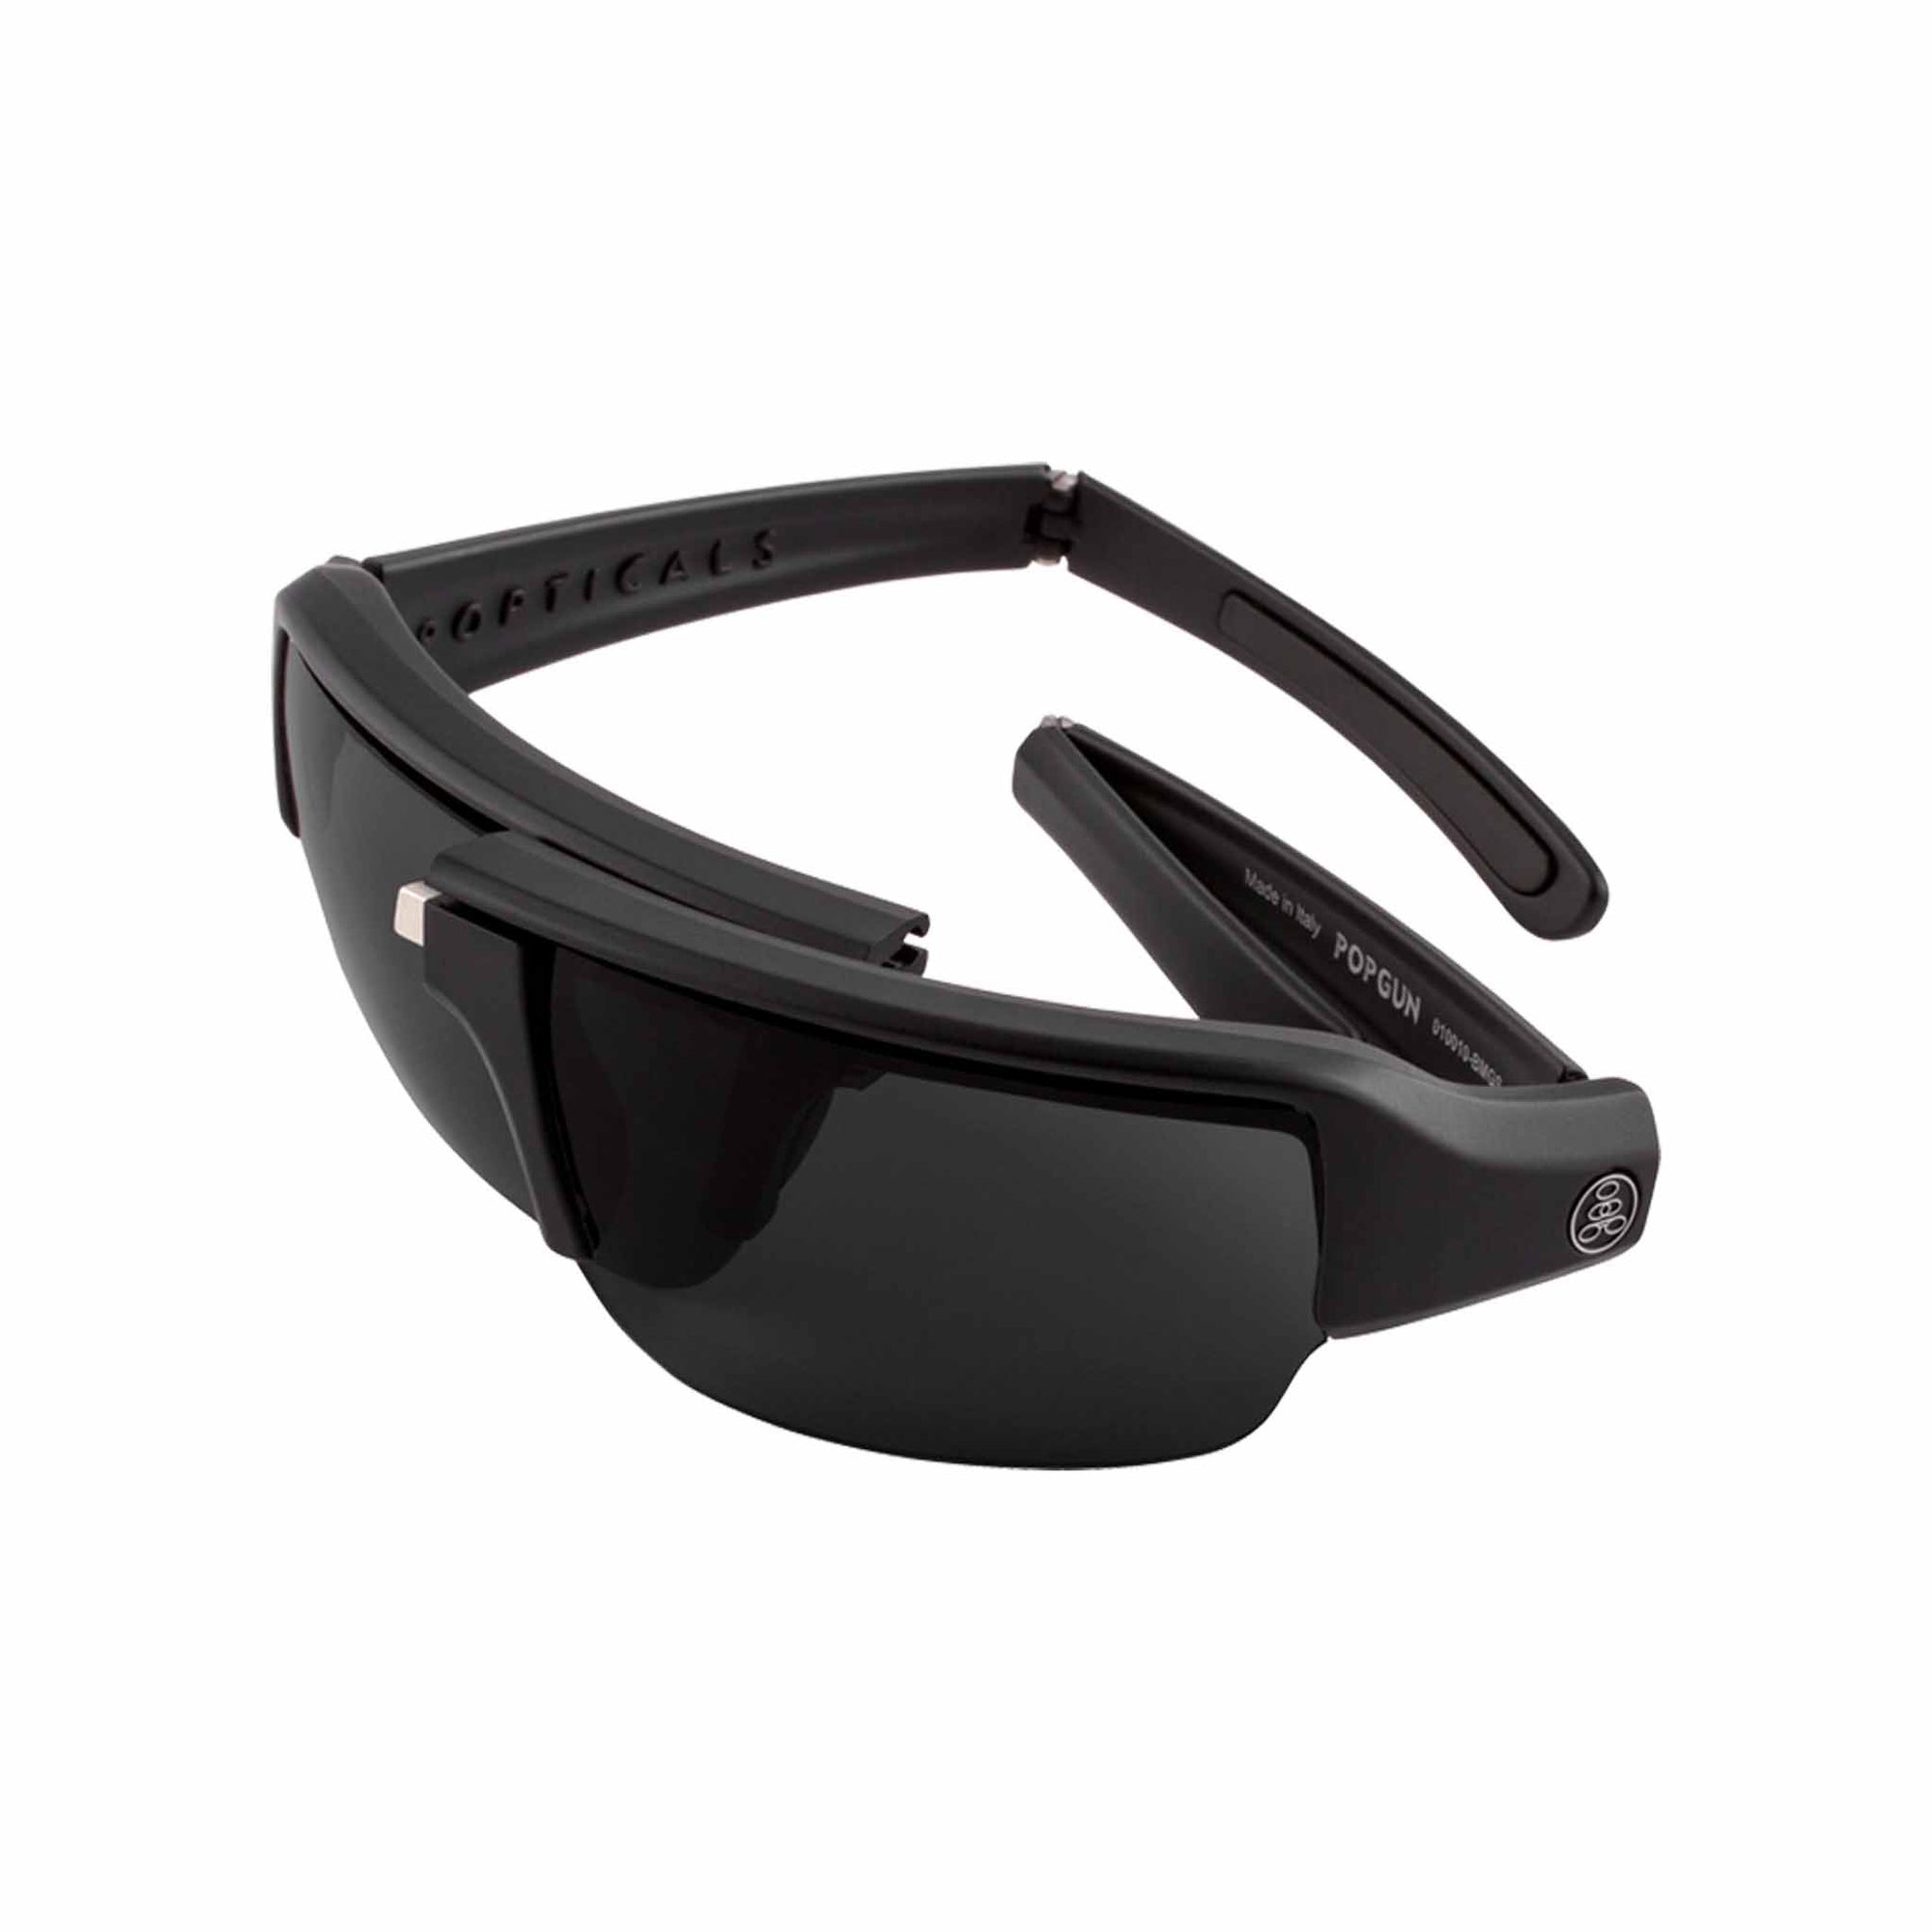 Popticals, Premium Compact Sunglasses, PopGun, 010010-BMGP, Polarized Sunglasses, Matte Black Frame, Gray Lenses, Glam View